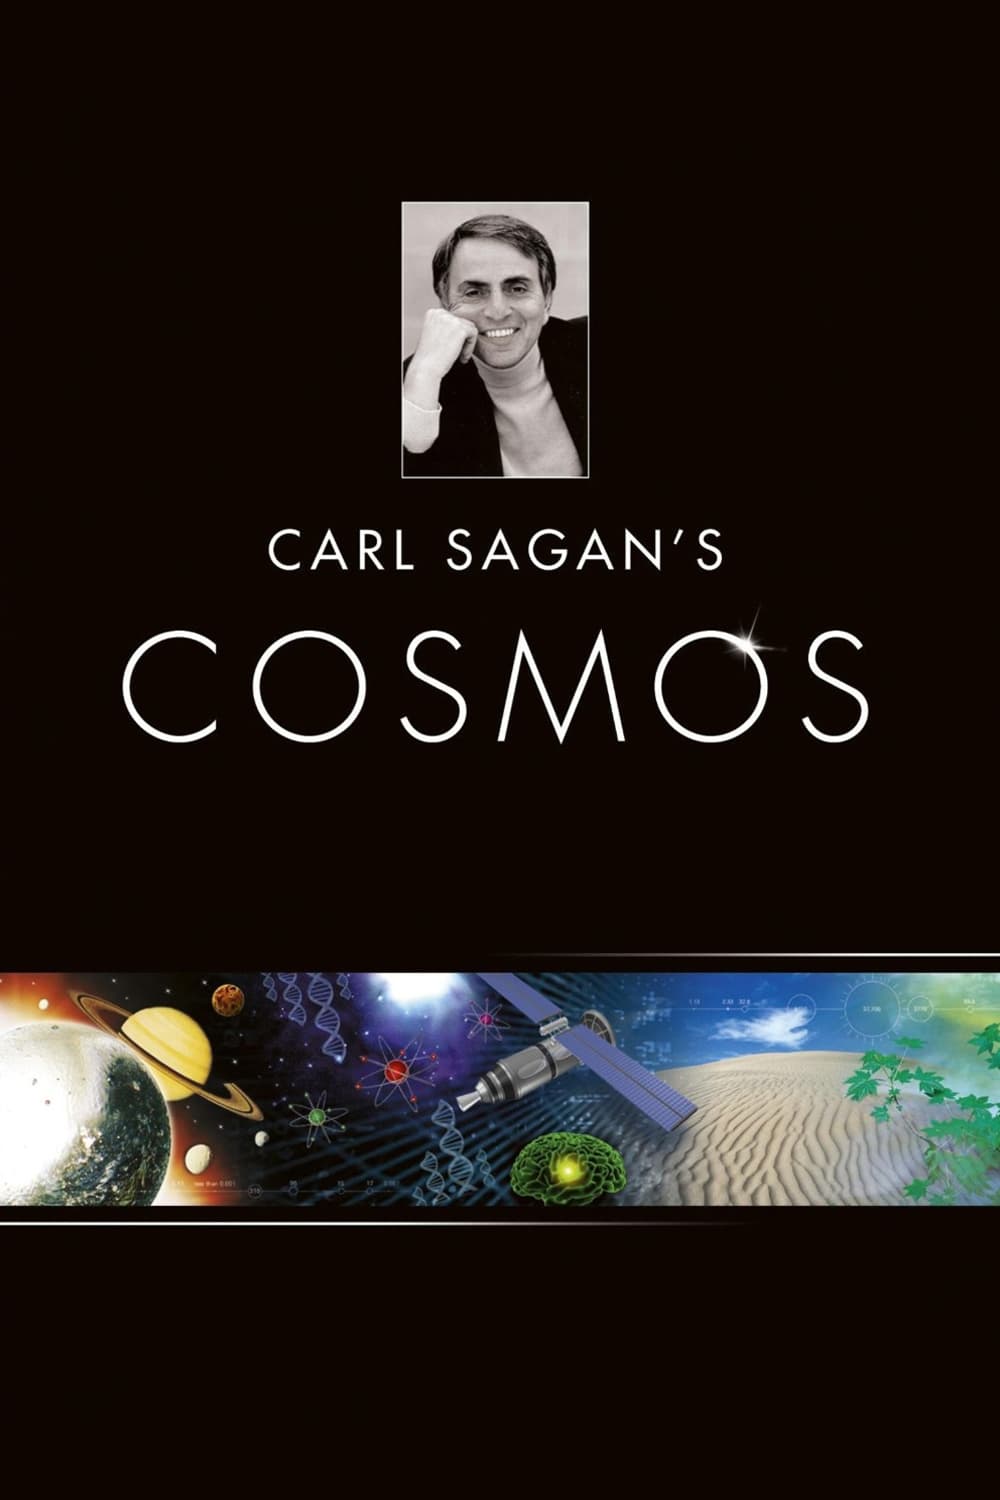 Plakát pro film “Cosmos”